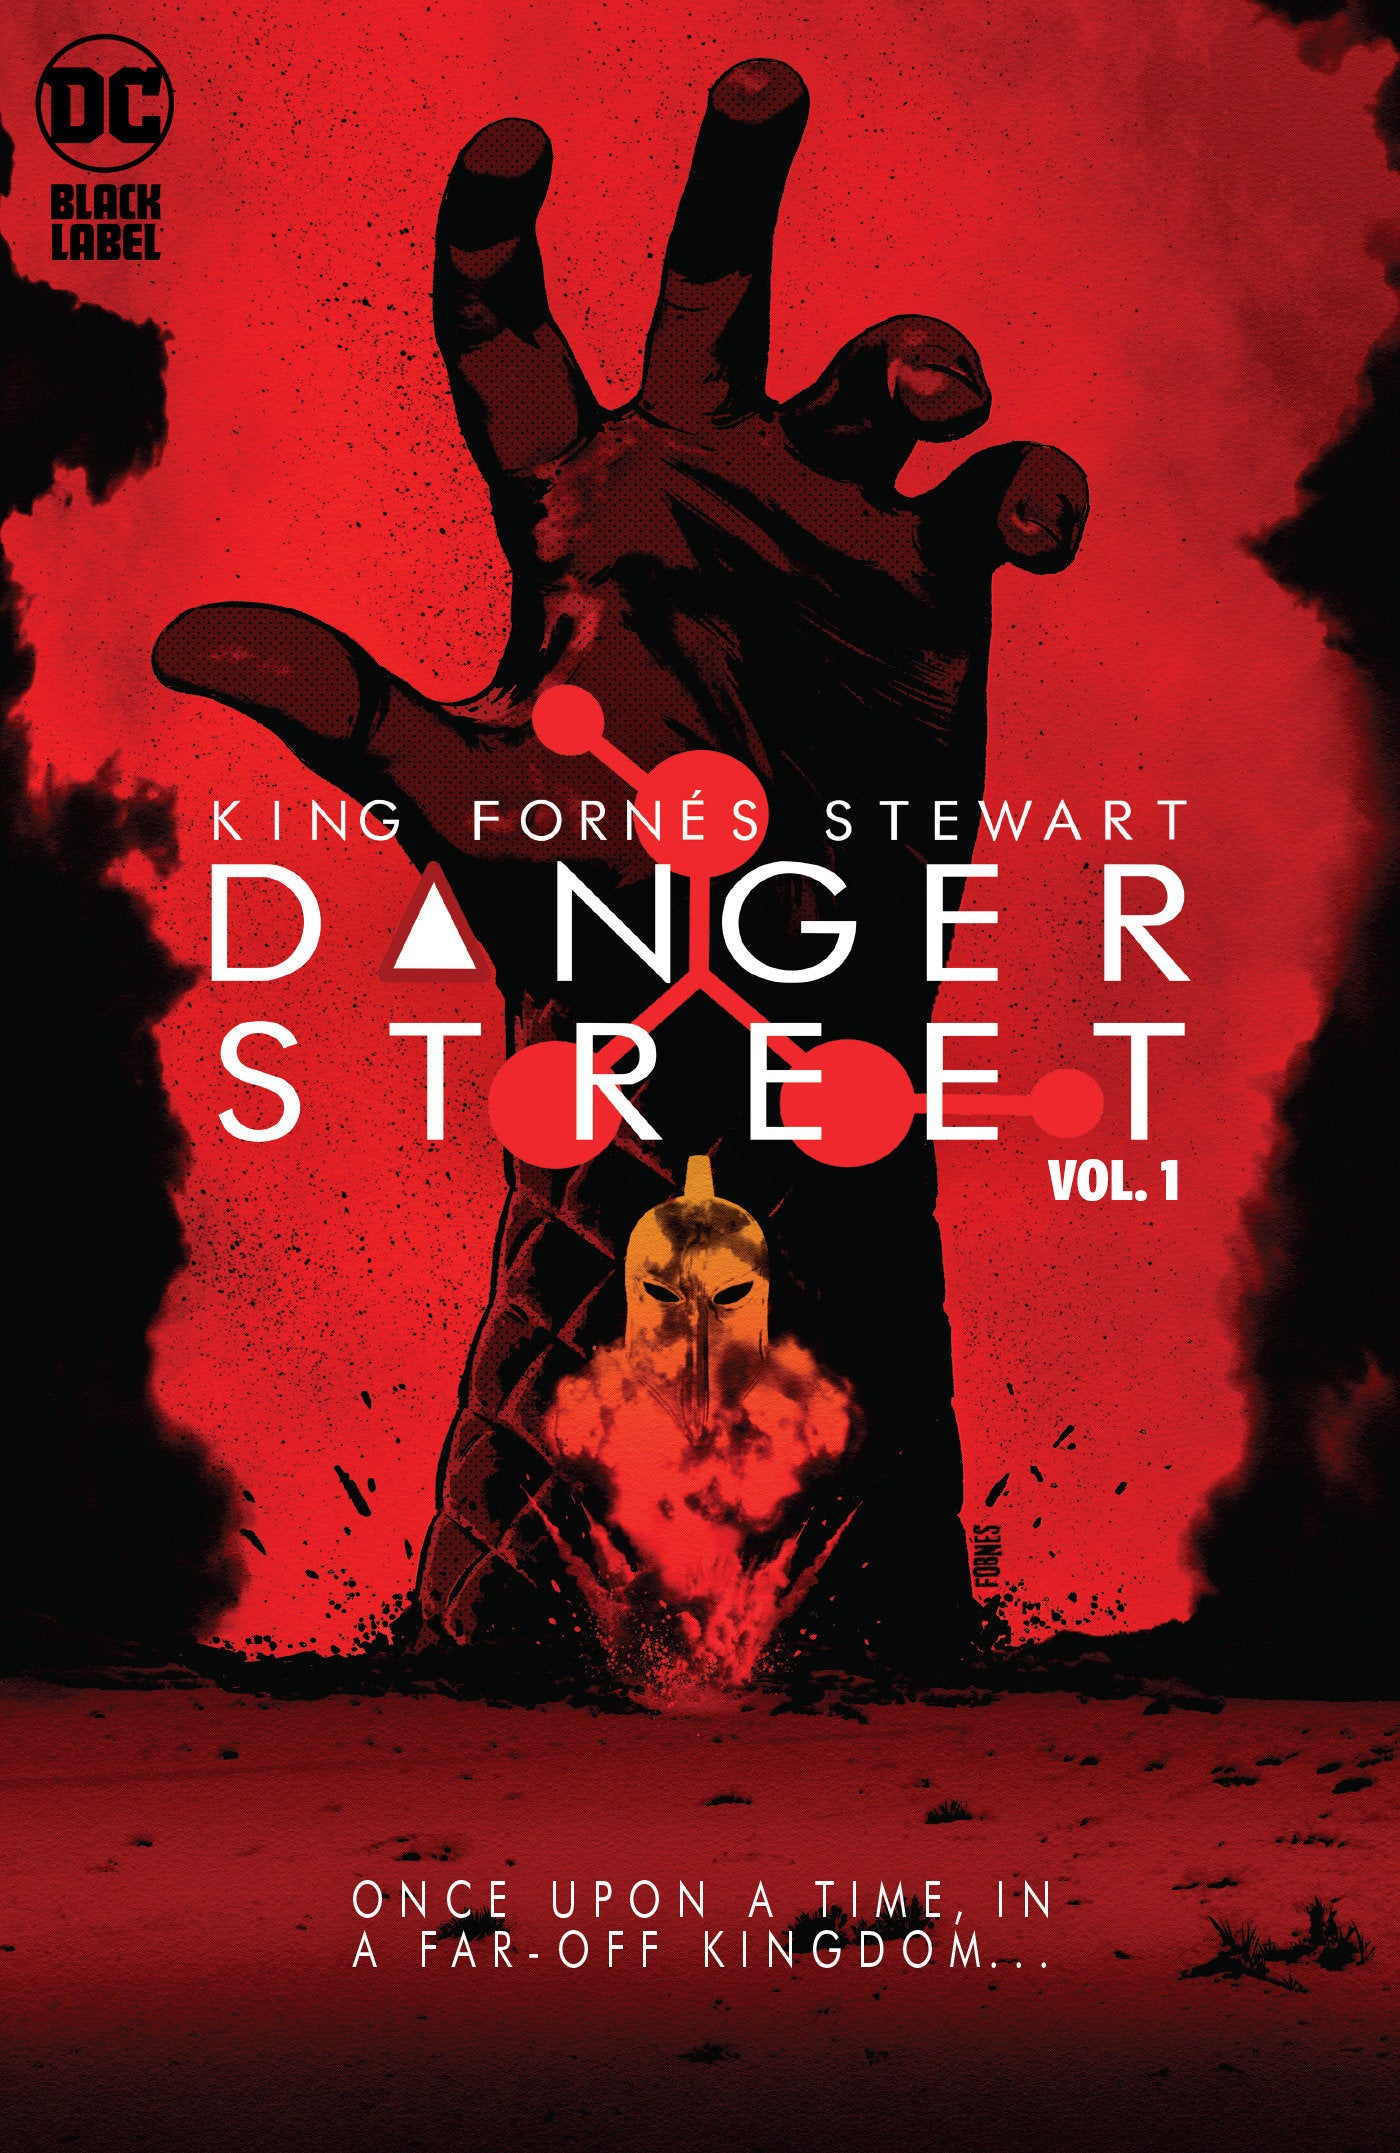 Danger Street Vol. 1